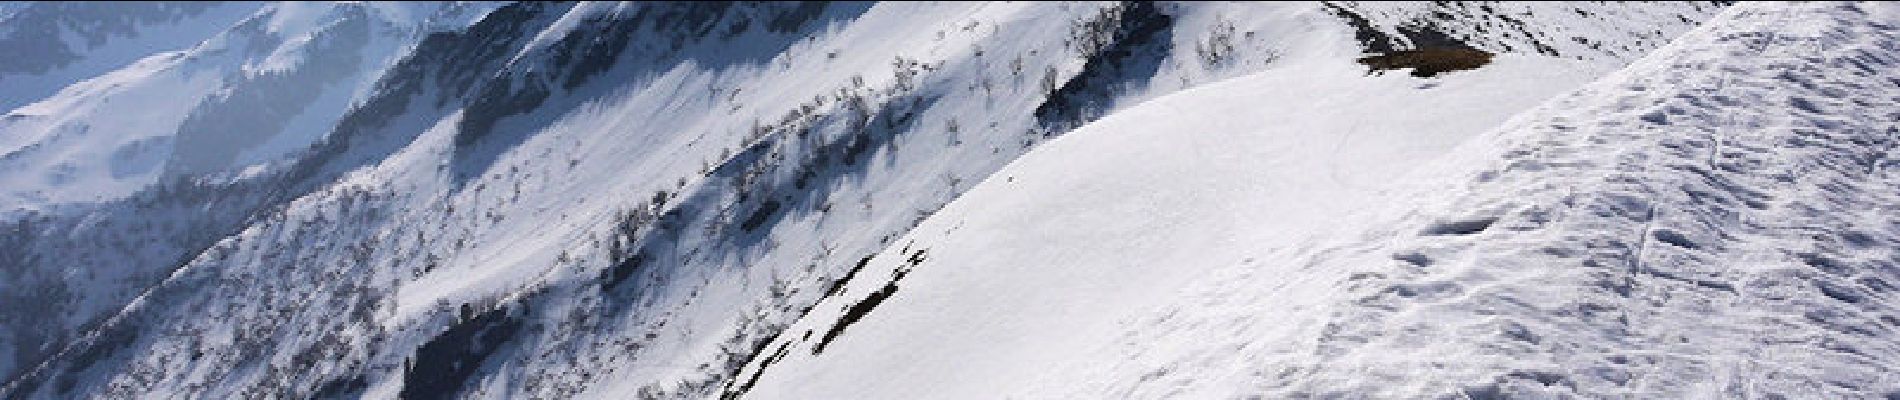 Tour Schneeschuhwandern Arvillard - Les crêtes de la Montagne d'Arvillard en raquettes - Photo